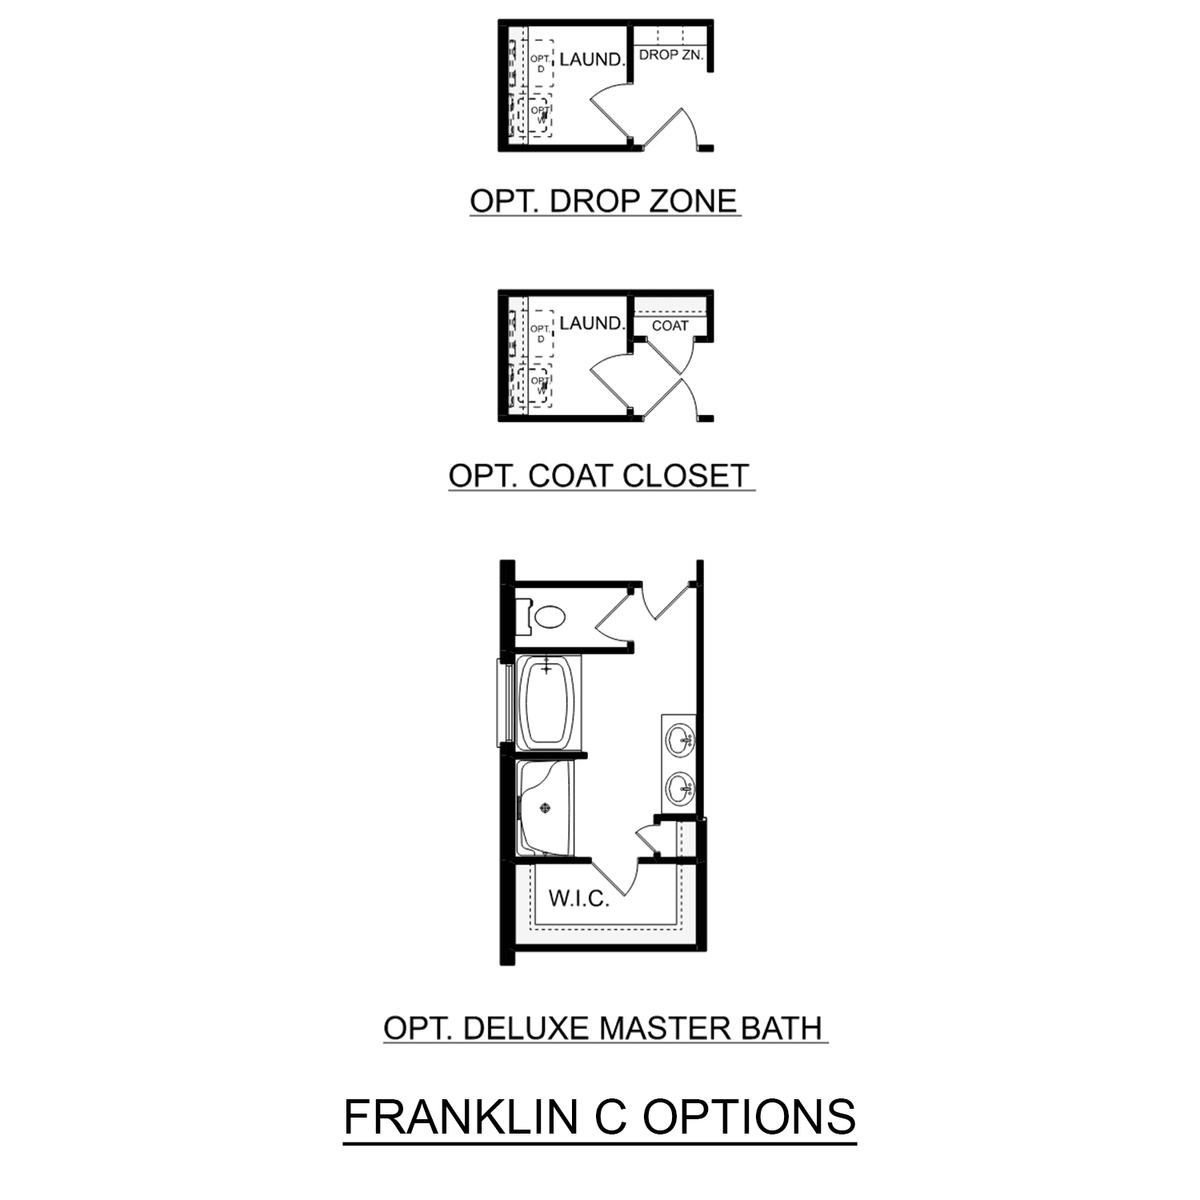 2 - The Franklin C floor plan layout for 27244 Mckenna Drive in Davidson Homes' Mallard Landing community.